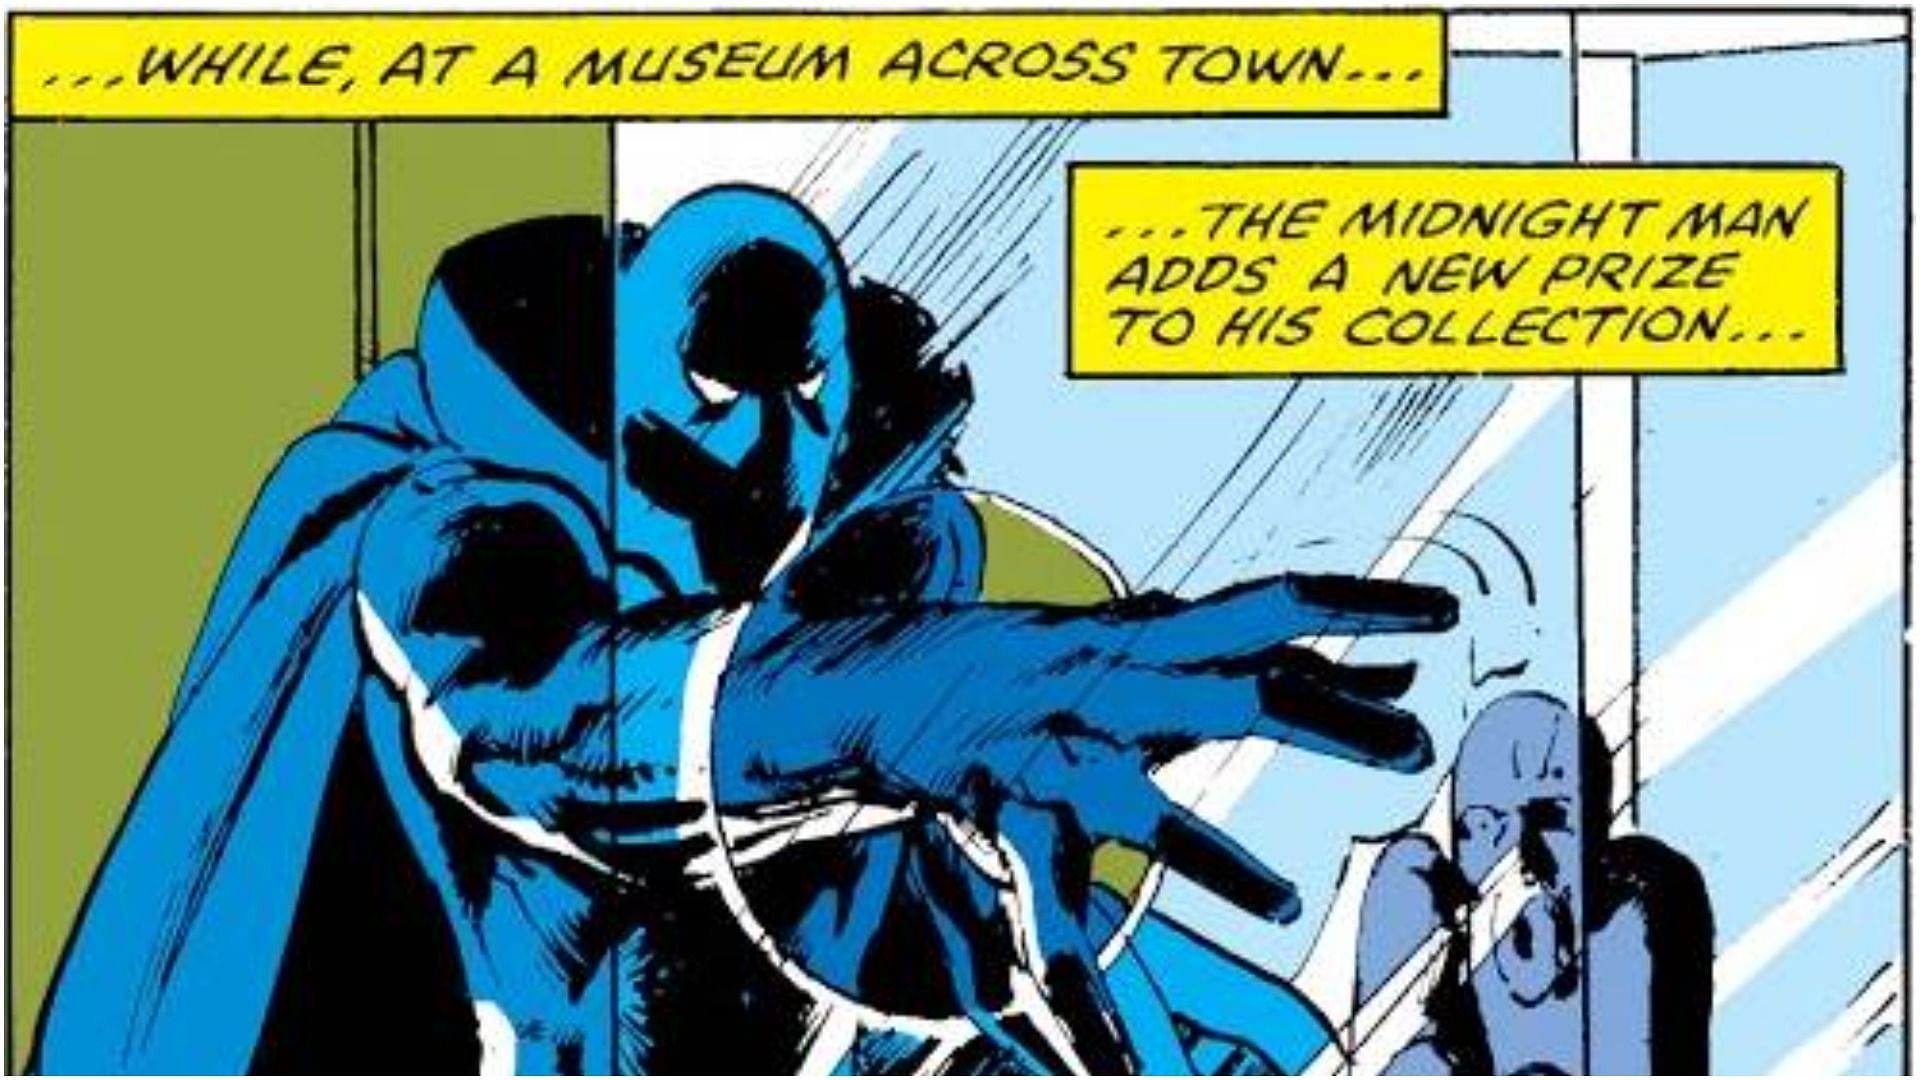 Midnight Man in comics (Image via Marvel Comics)